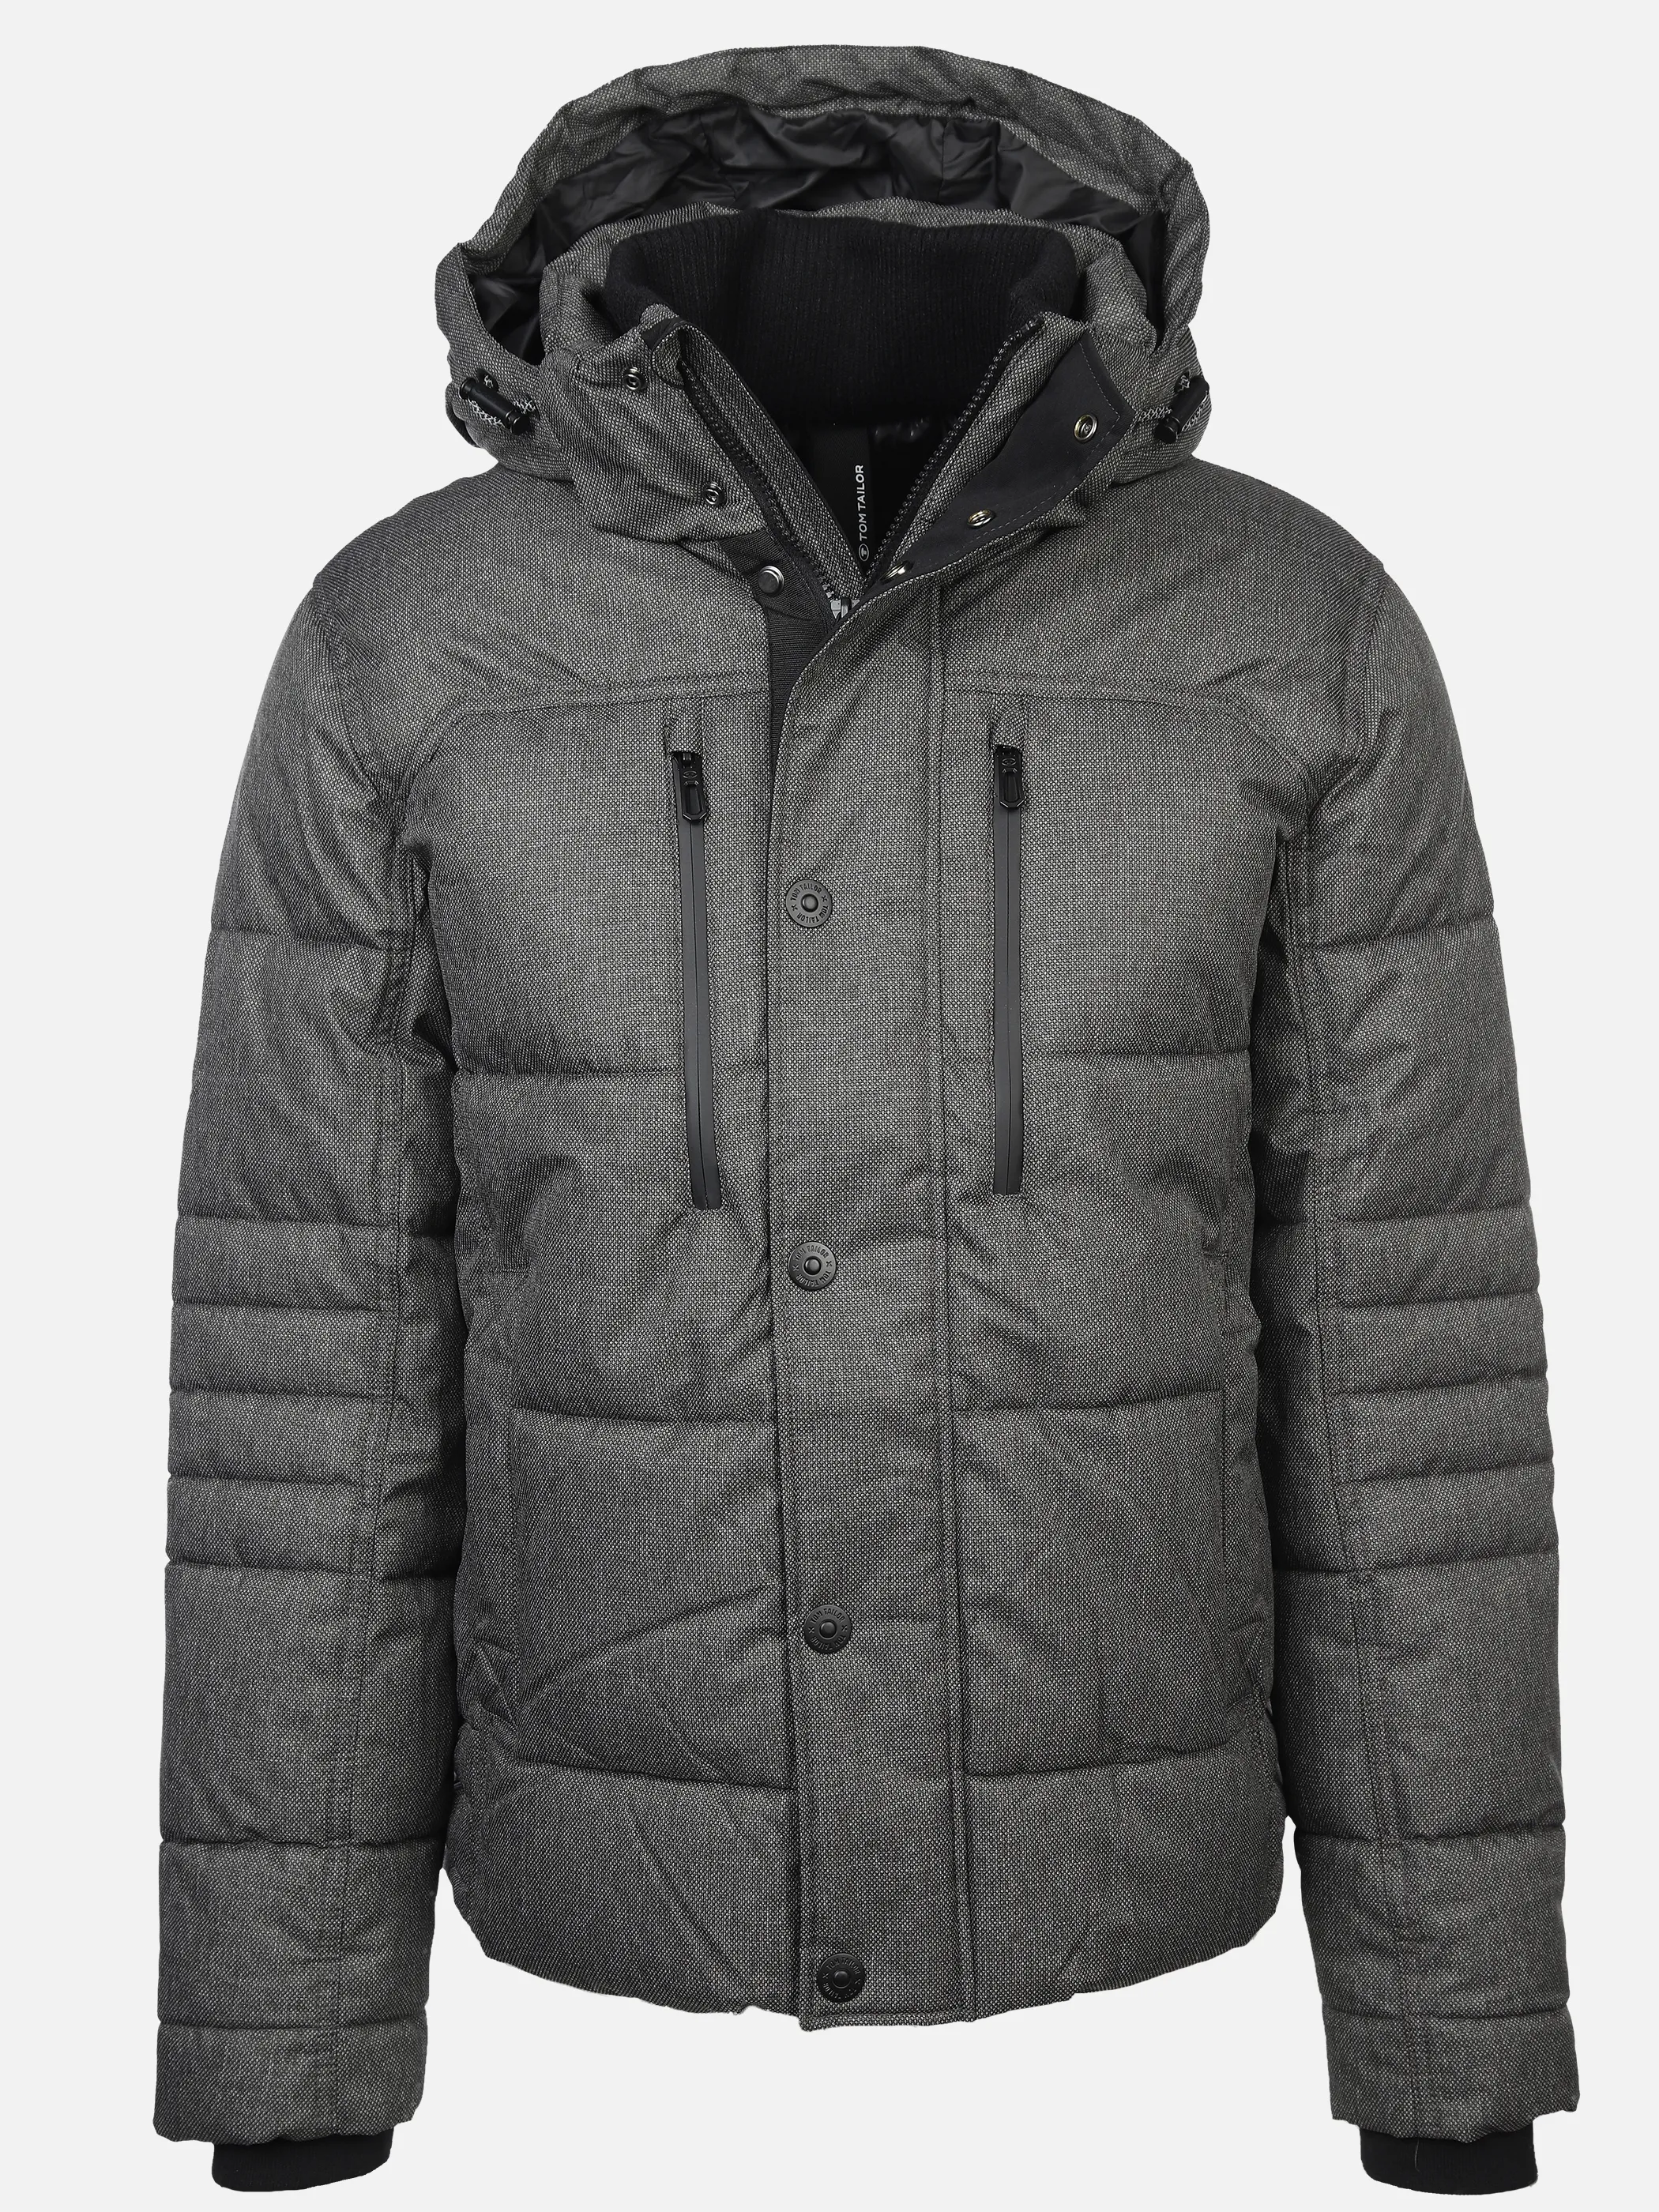 Tom Tailor 1038935 puffer jacket with hood Grau 884260 28007 1